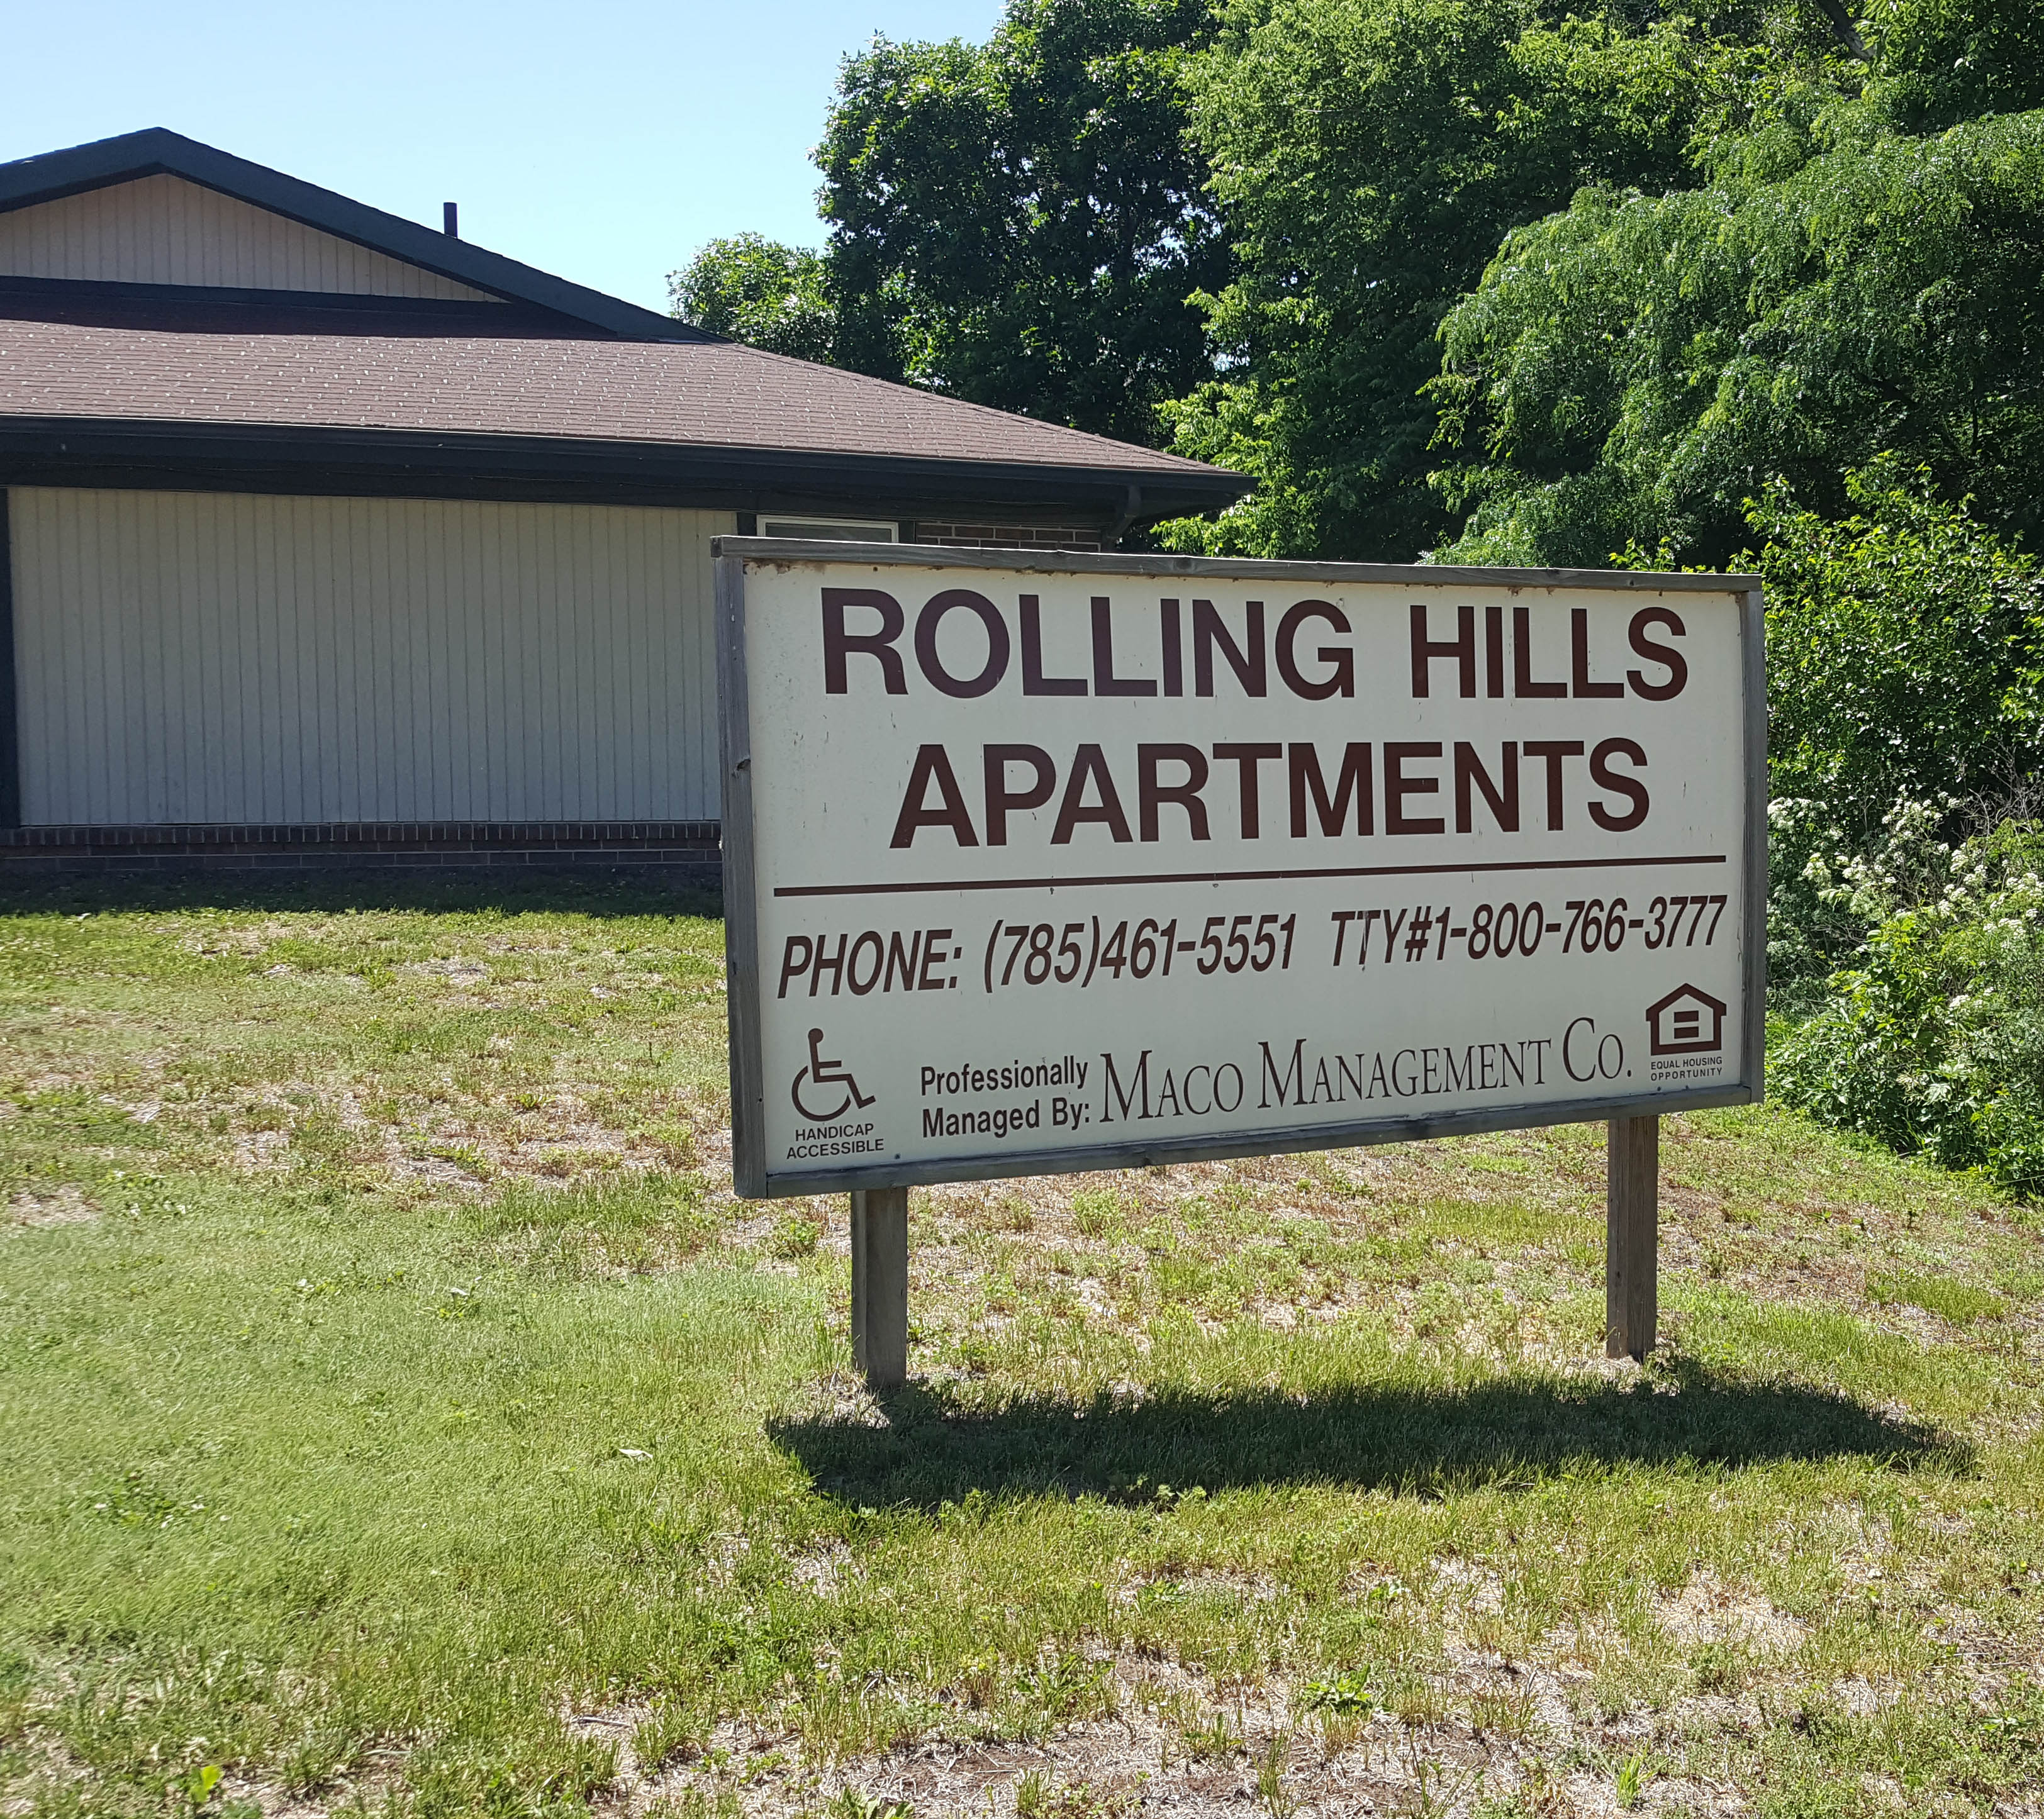 ROLLING HILLS APARTMENTS